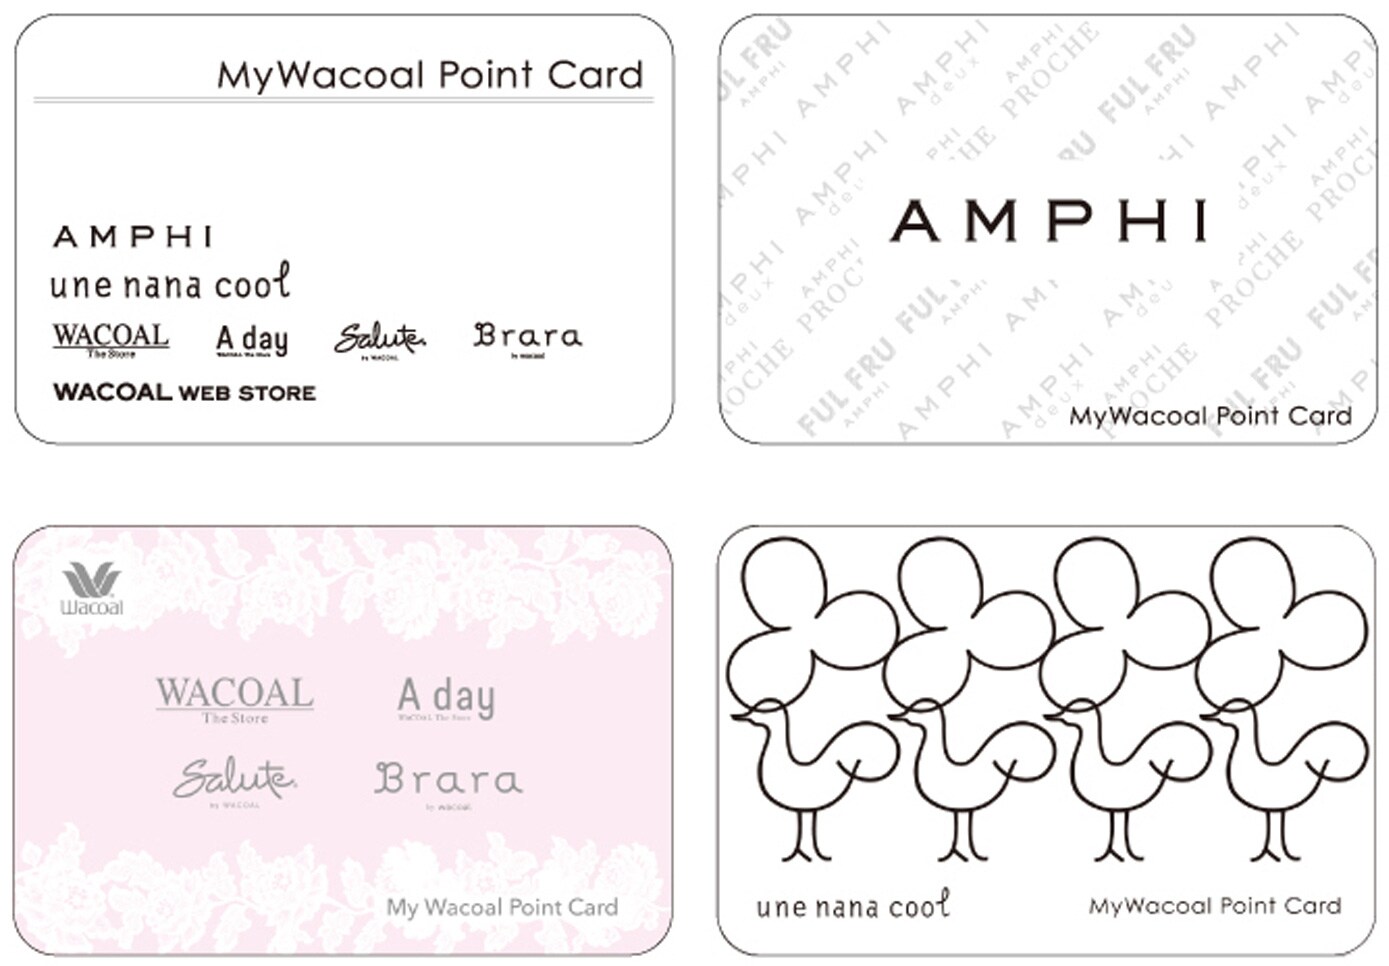 MyWacoal Point Card